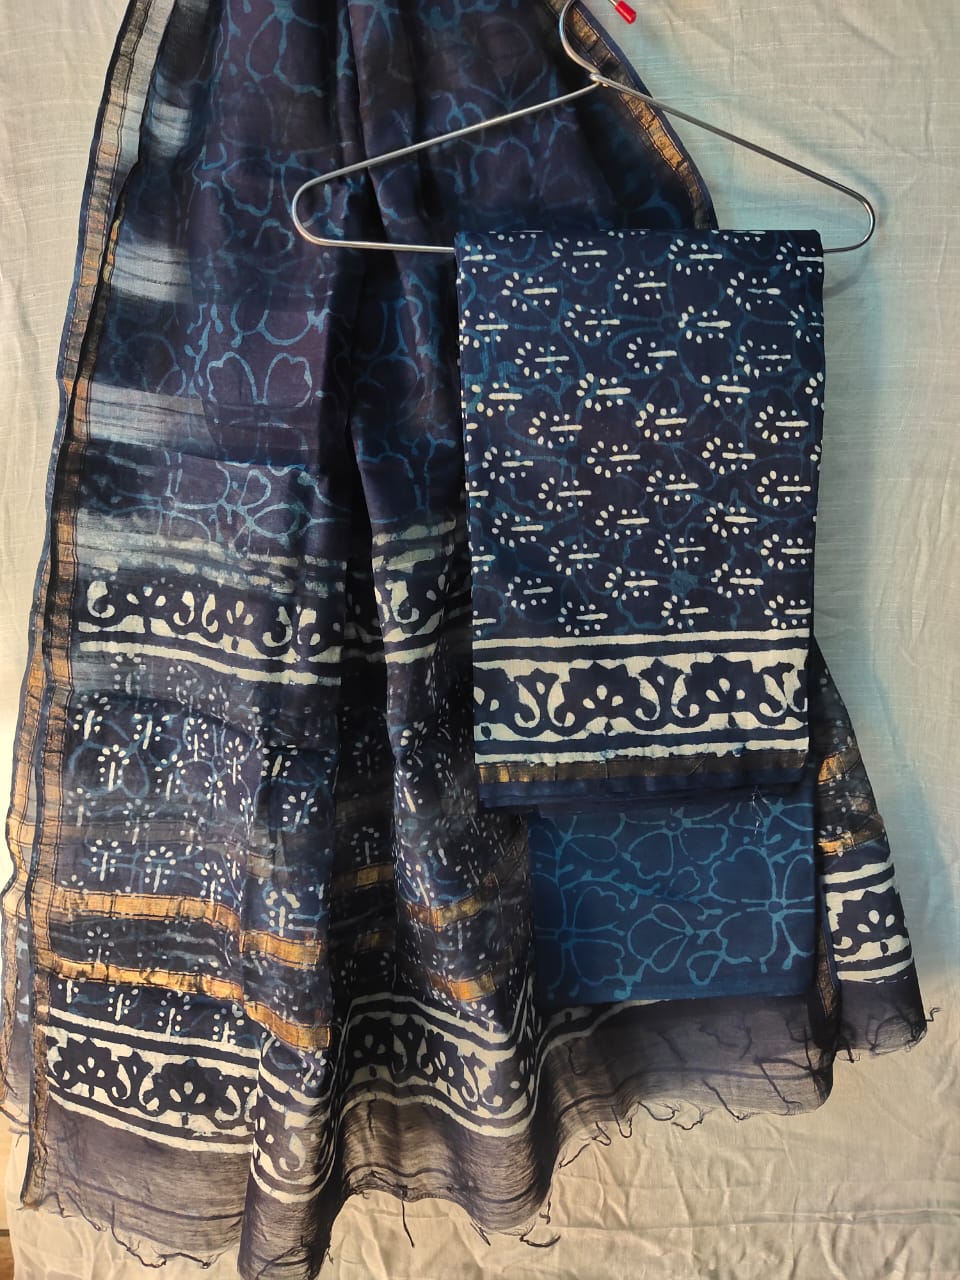 Indigo Chanderi Silk Top & Dupatta With Cotton Bottom - HandBlock Printed Salwar Suit Set - JBXCS25